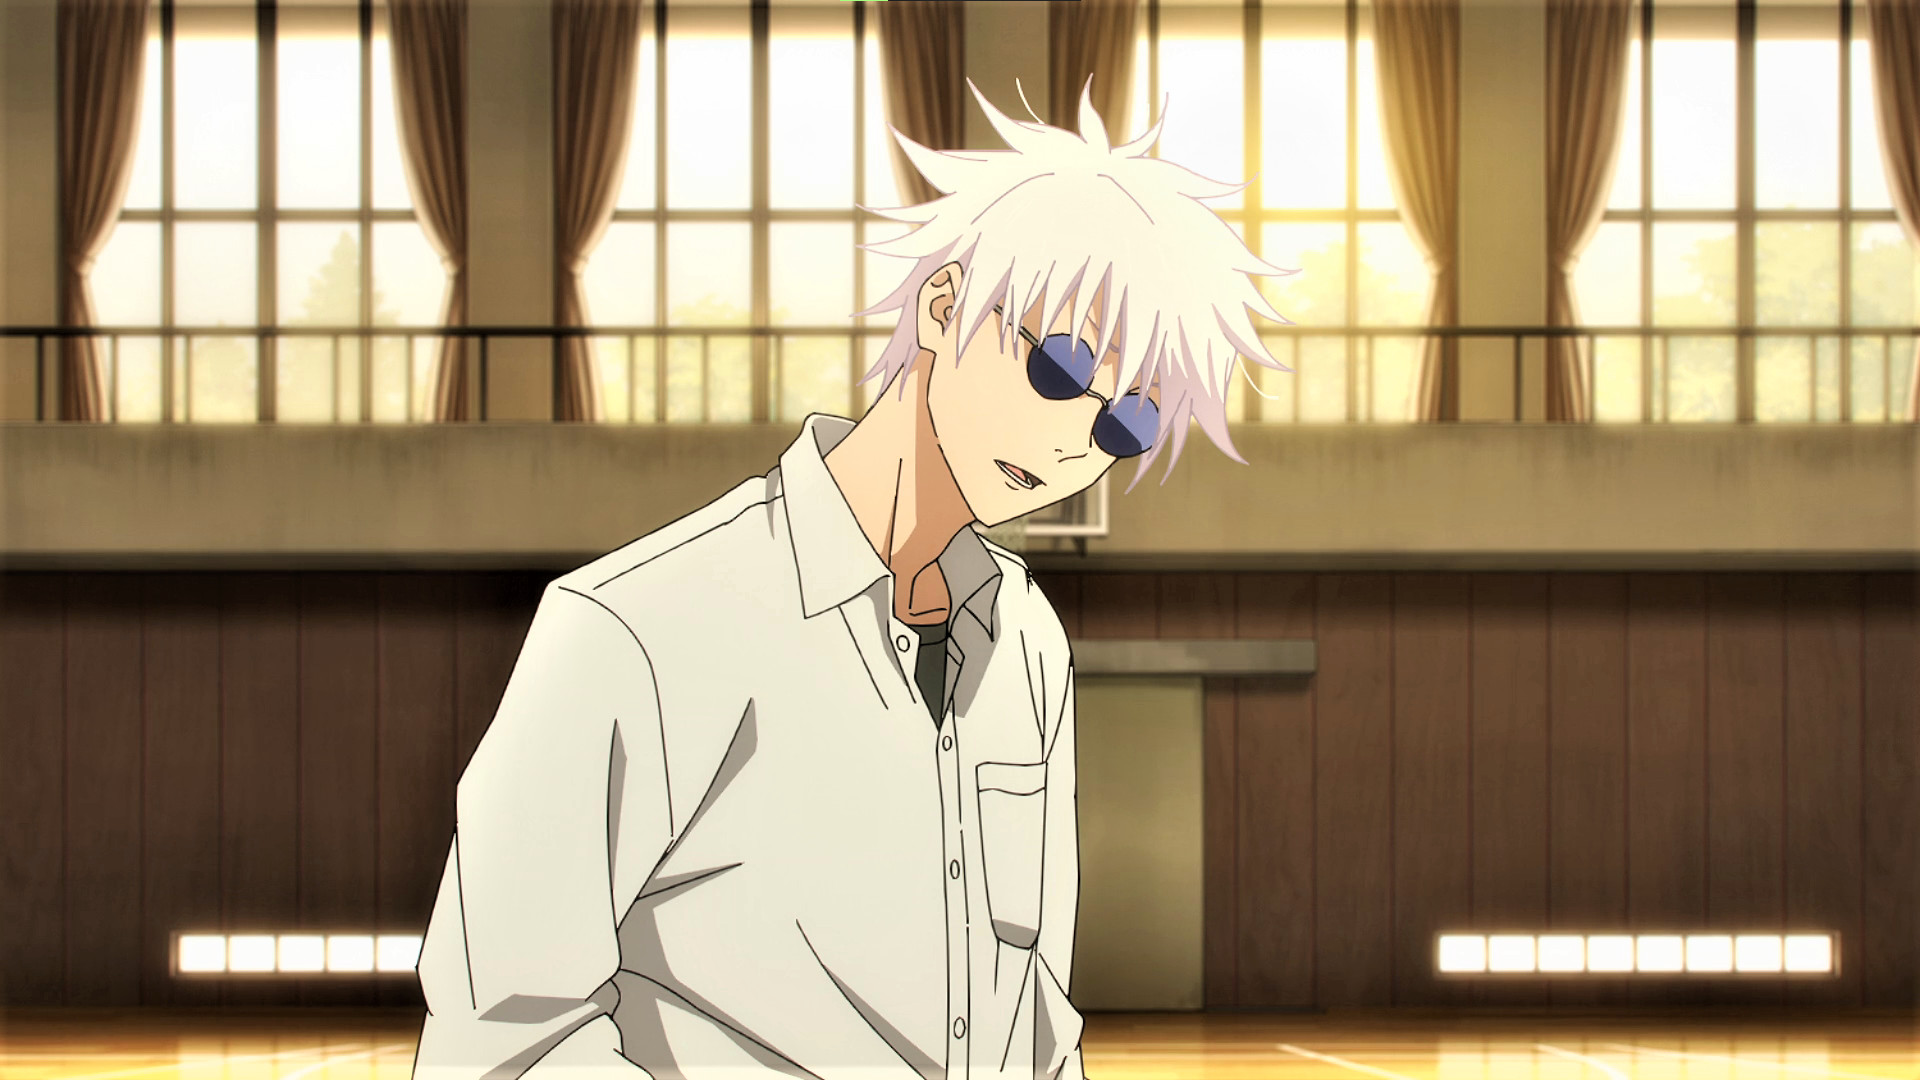 Anime 1920x1080 Jujutsu Kaisen Satoru Gojo glasses white hair anime Anime screenshot anime boys sunlight window looking at viewer